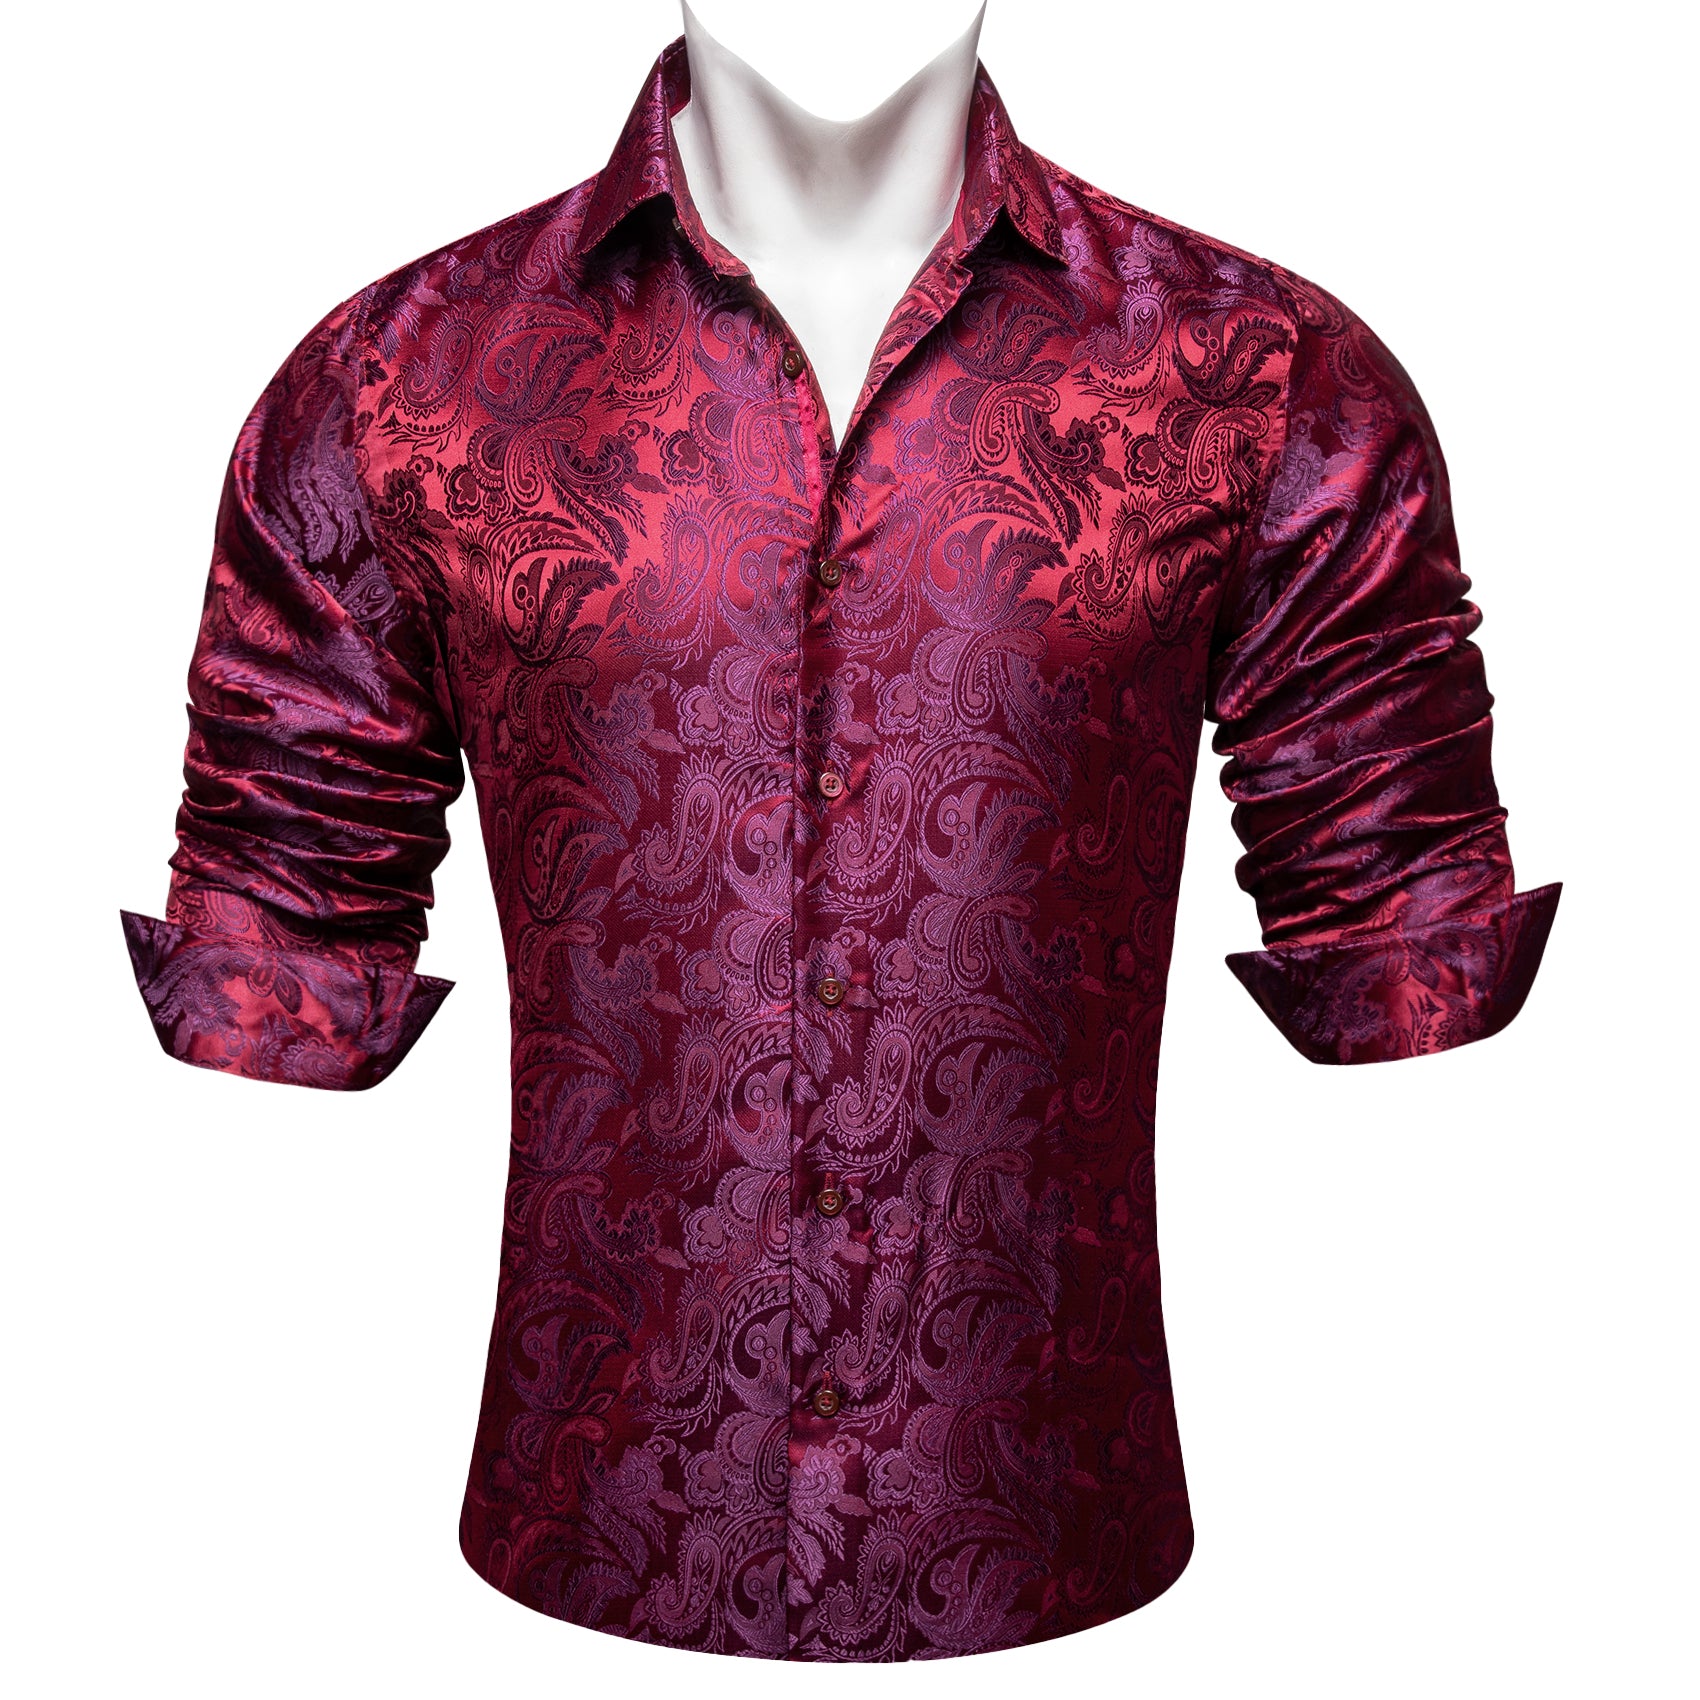 Barry.wang Red Purple Paisley Silk Men's Shirt